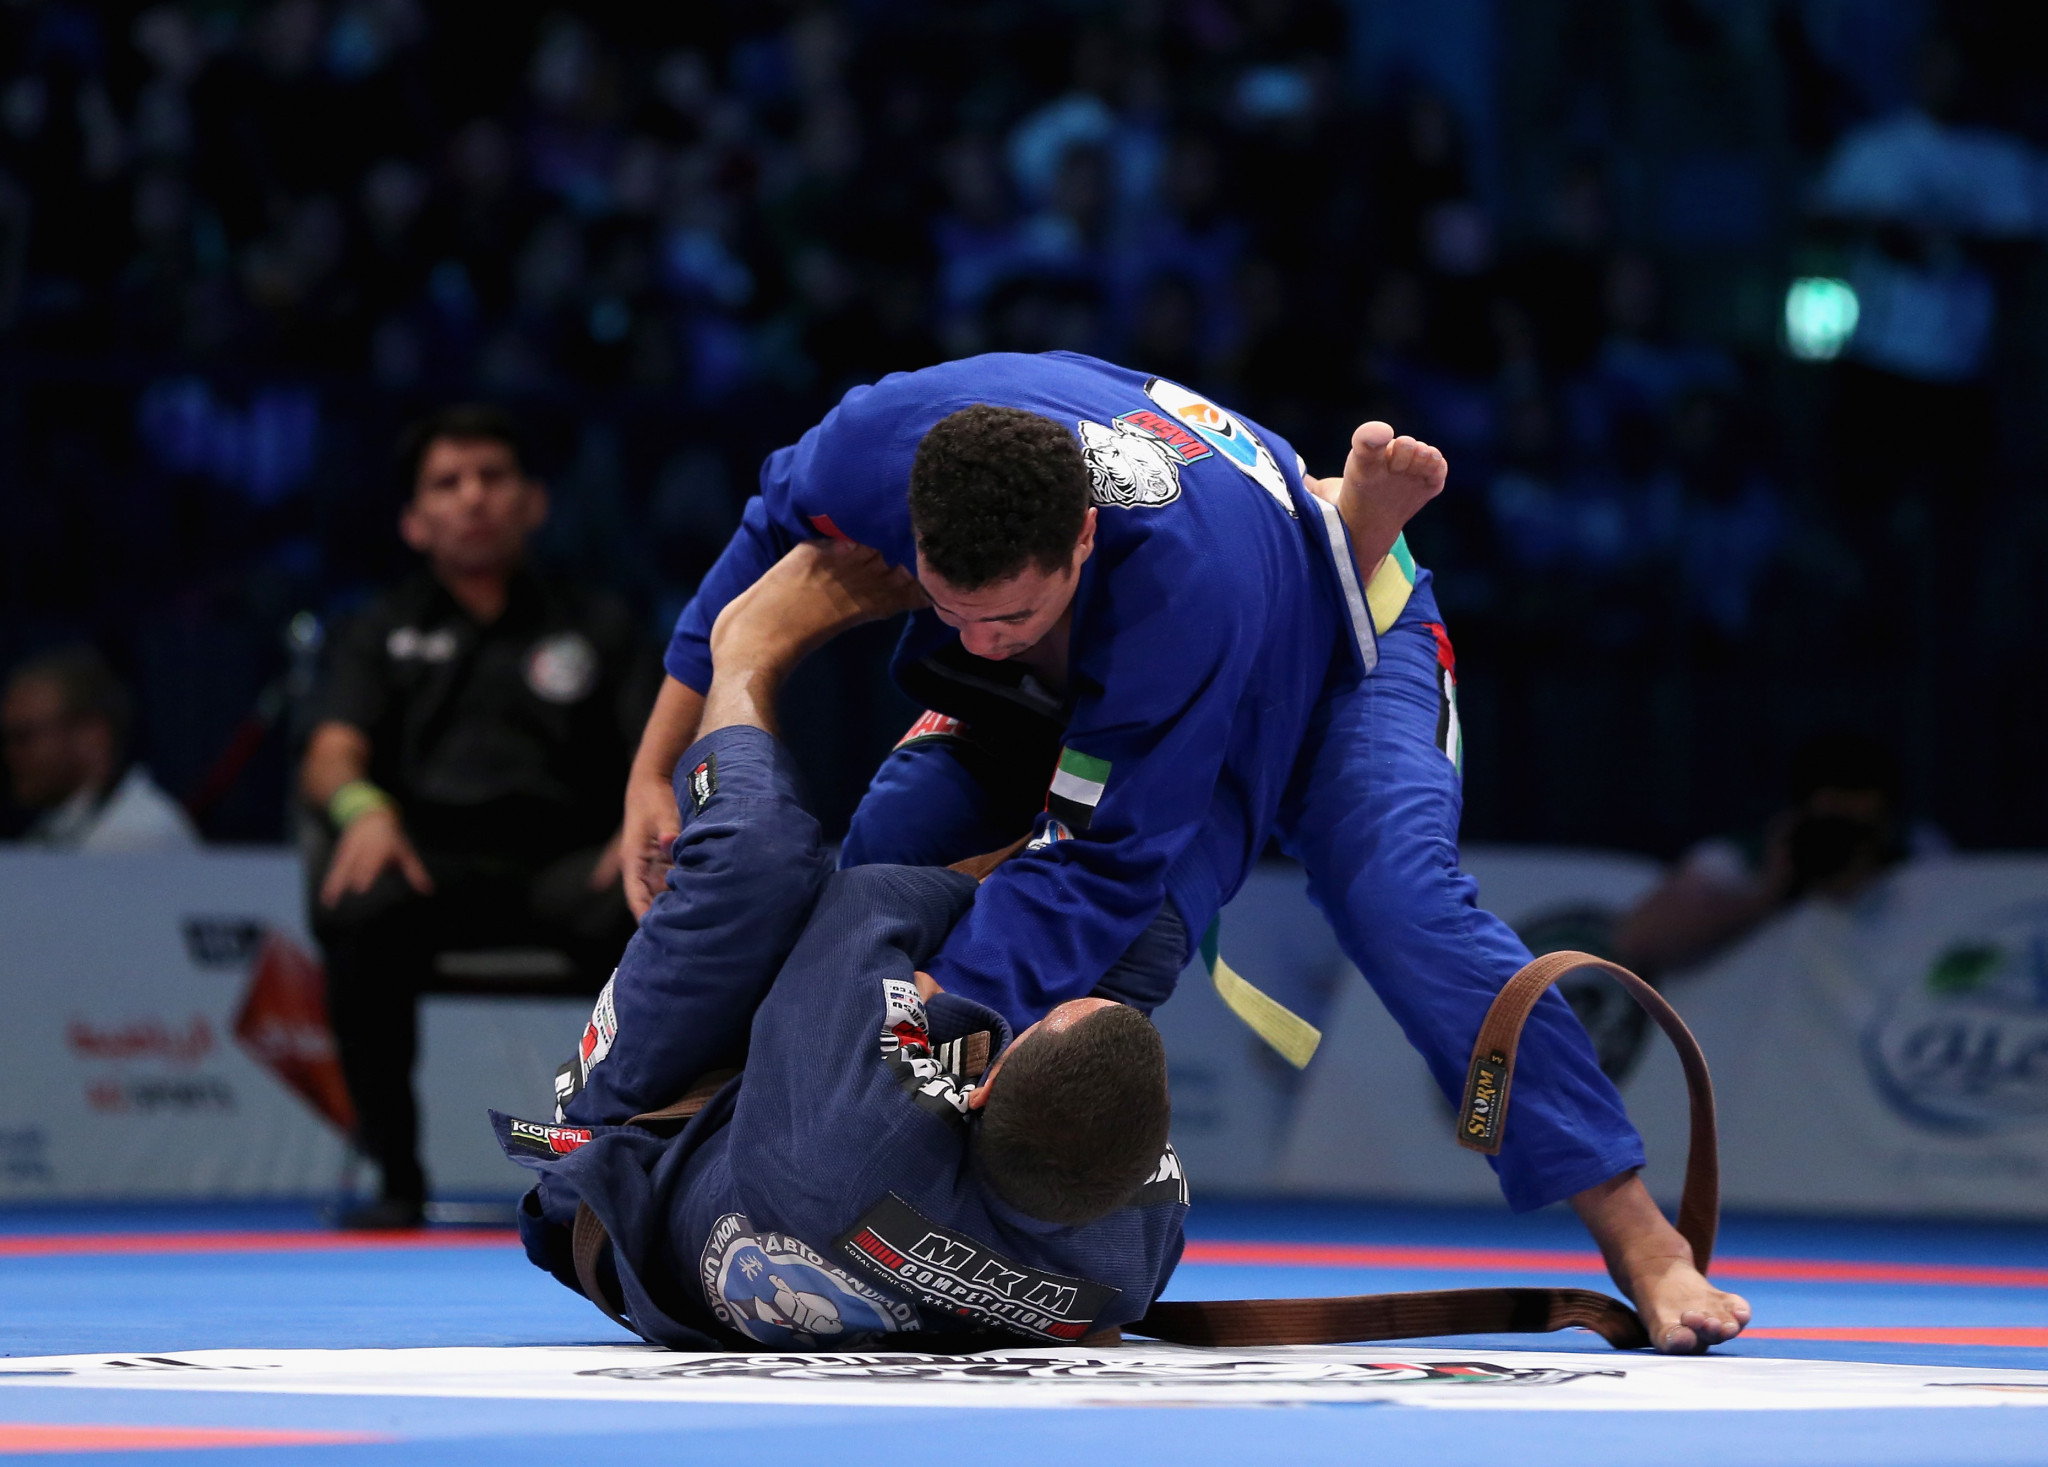 Faisal Al Ketbi will lead United Arab Emirates hopes for gold at the Ju-Jitsu International Federation World Championships ©Getty Images